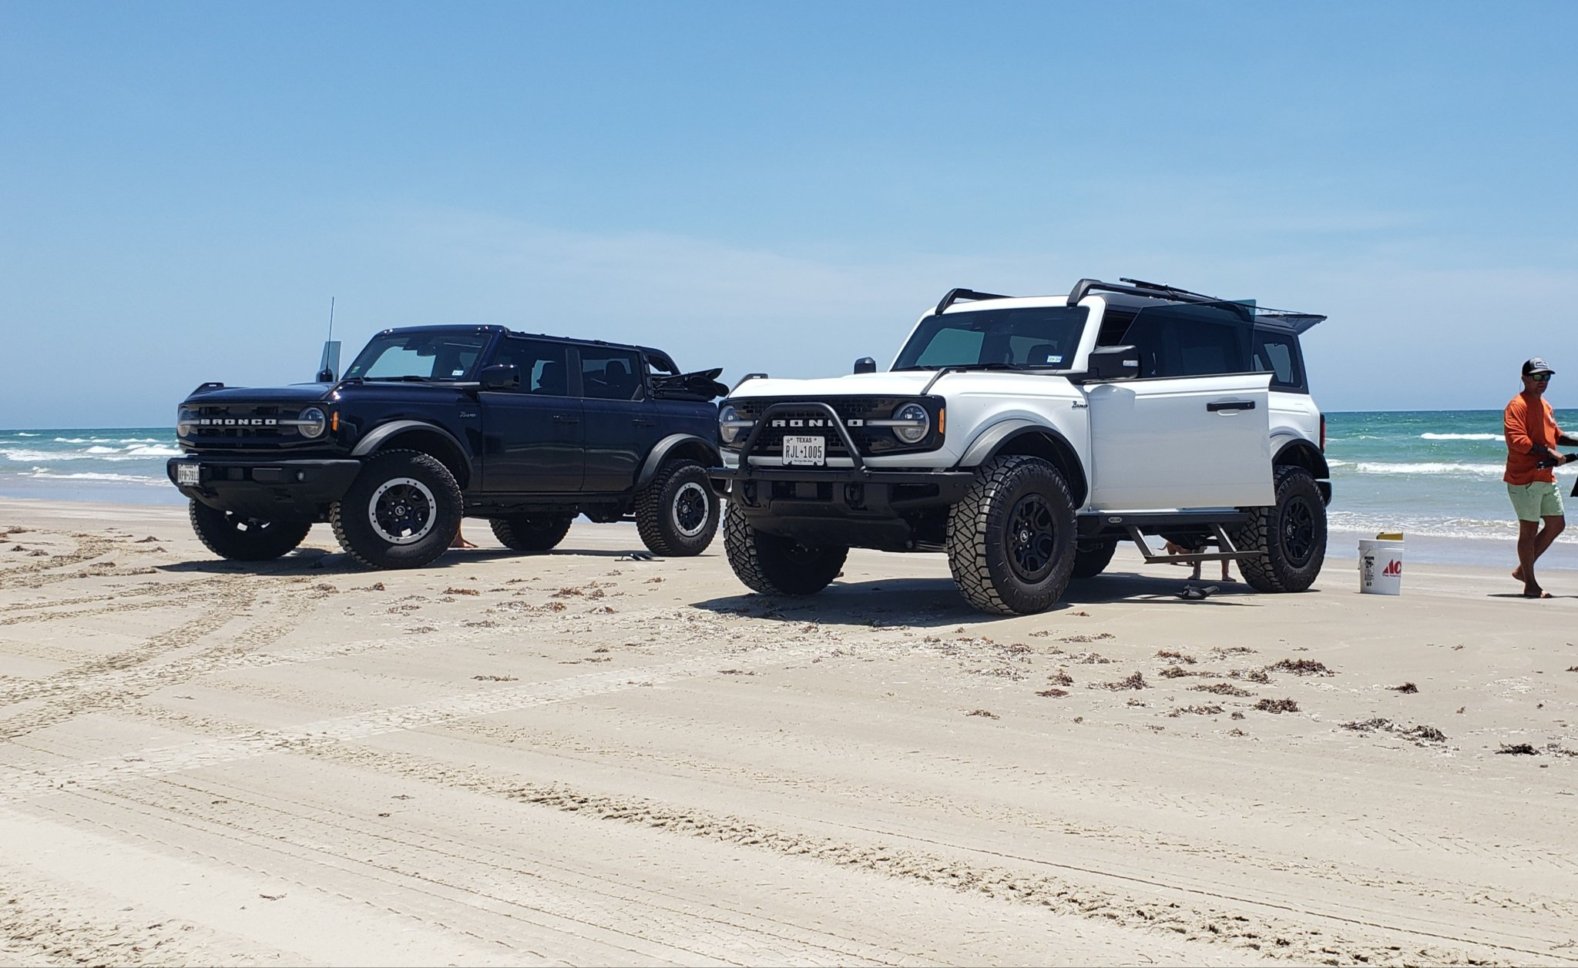 Ford Bronco Let’s see those Beach pics! seashore